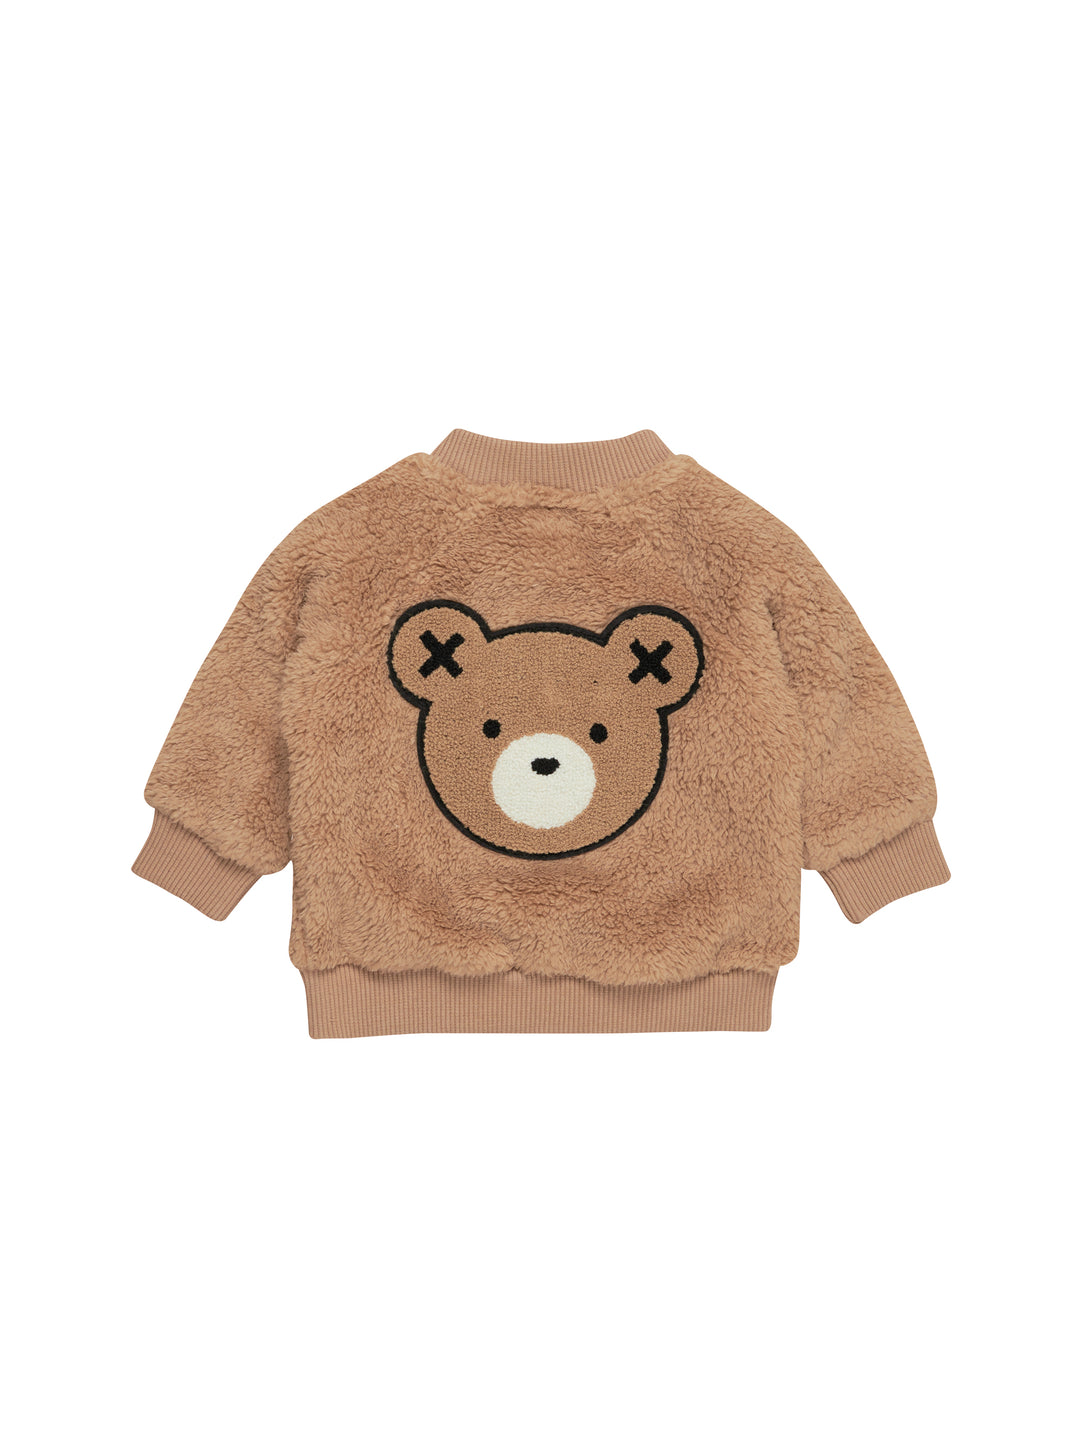 Huxbaby Fur Jacket - Teddy Bear